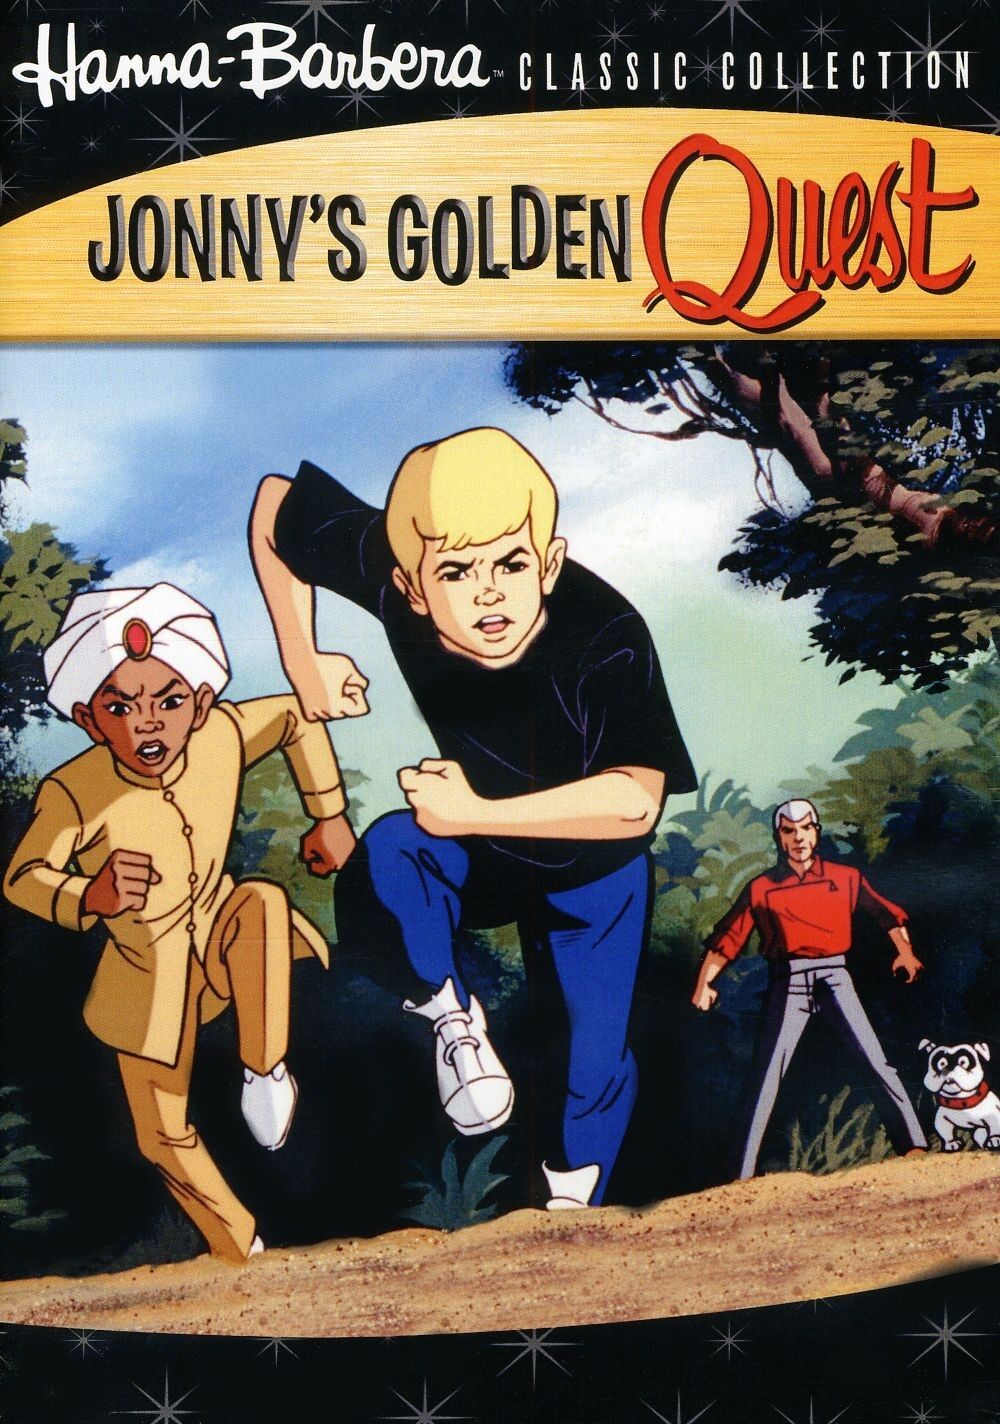 Jonny Quest: Complete Hanna Barbera Original & Sequel Series - 39 Episodes  + 2 Movies (Golden Quest / Cyber Insects) + Bonus Art Card: :  Movies & TV Shows